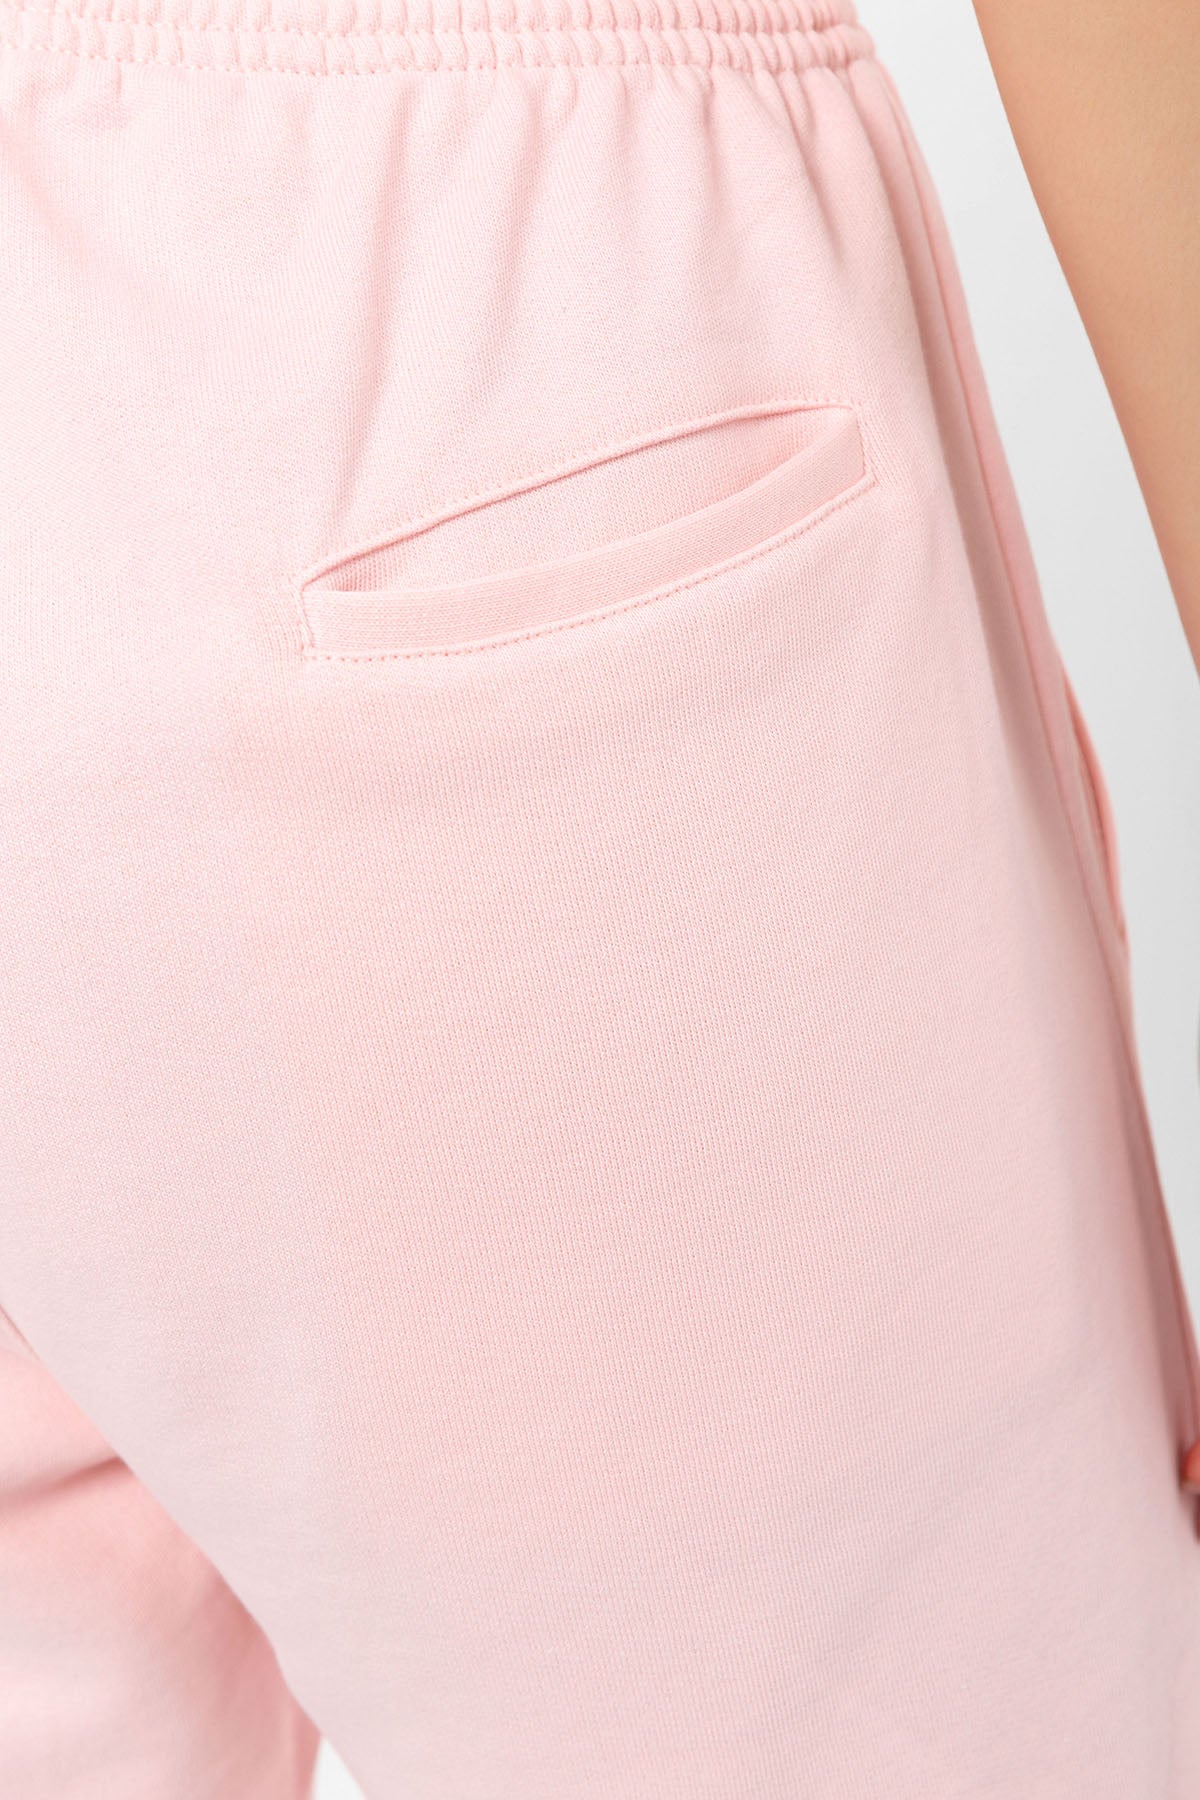 Unisex Shorts in Blush Pink